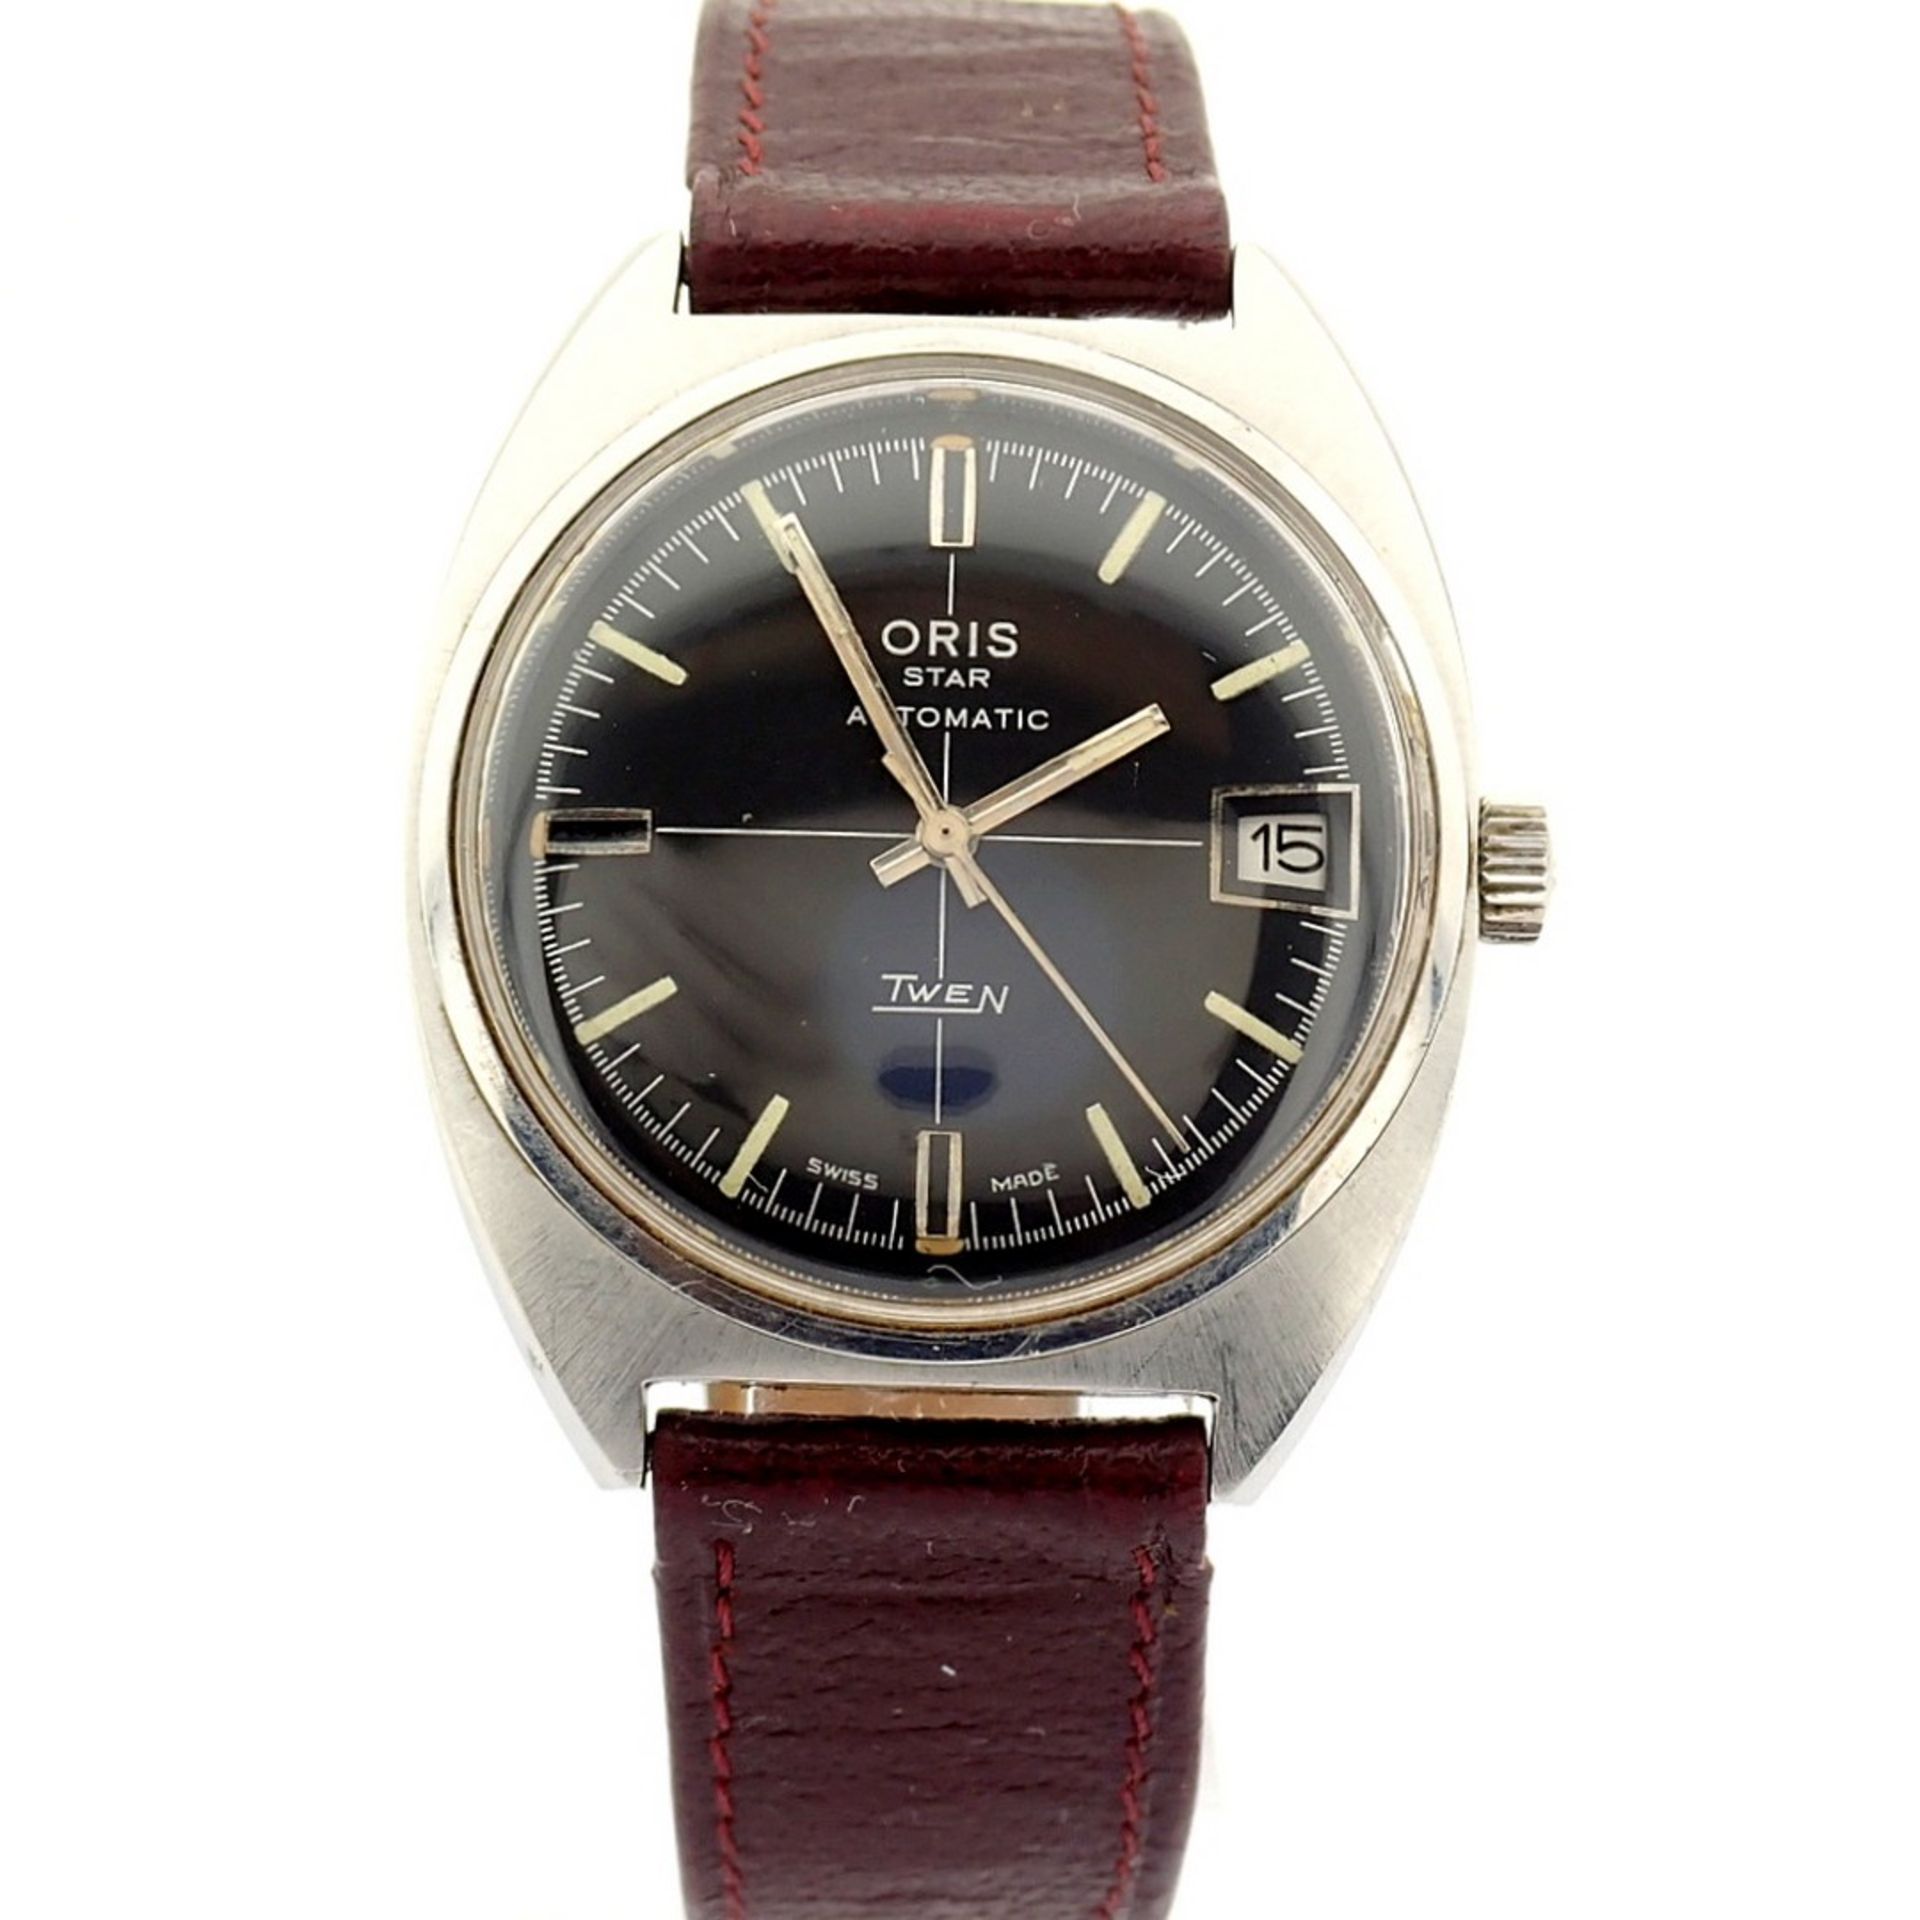 Oris / Oris Star Automatic Twen - Gentlemen's Steel Wrist Watch - Image 2 of 10